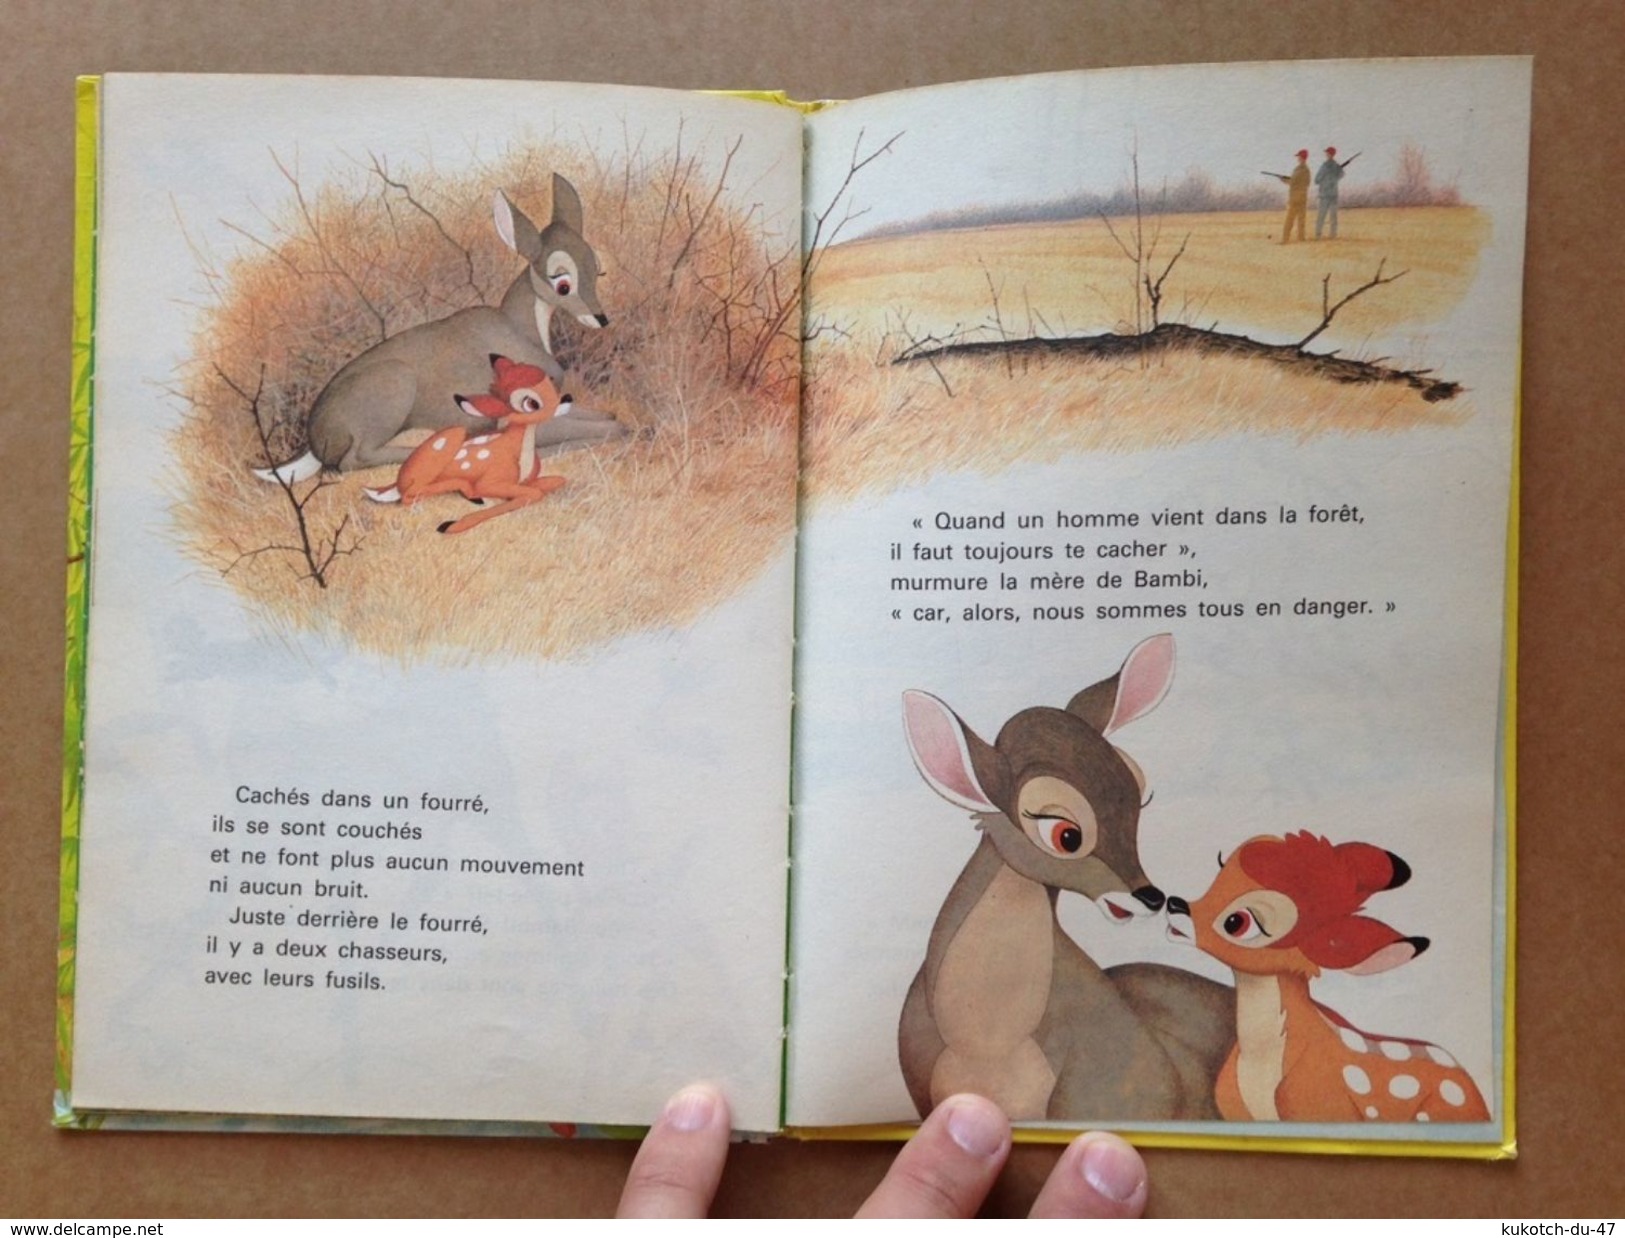 Disney - Mickey Club du livre - Bambi grandit (1992)